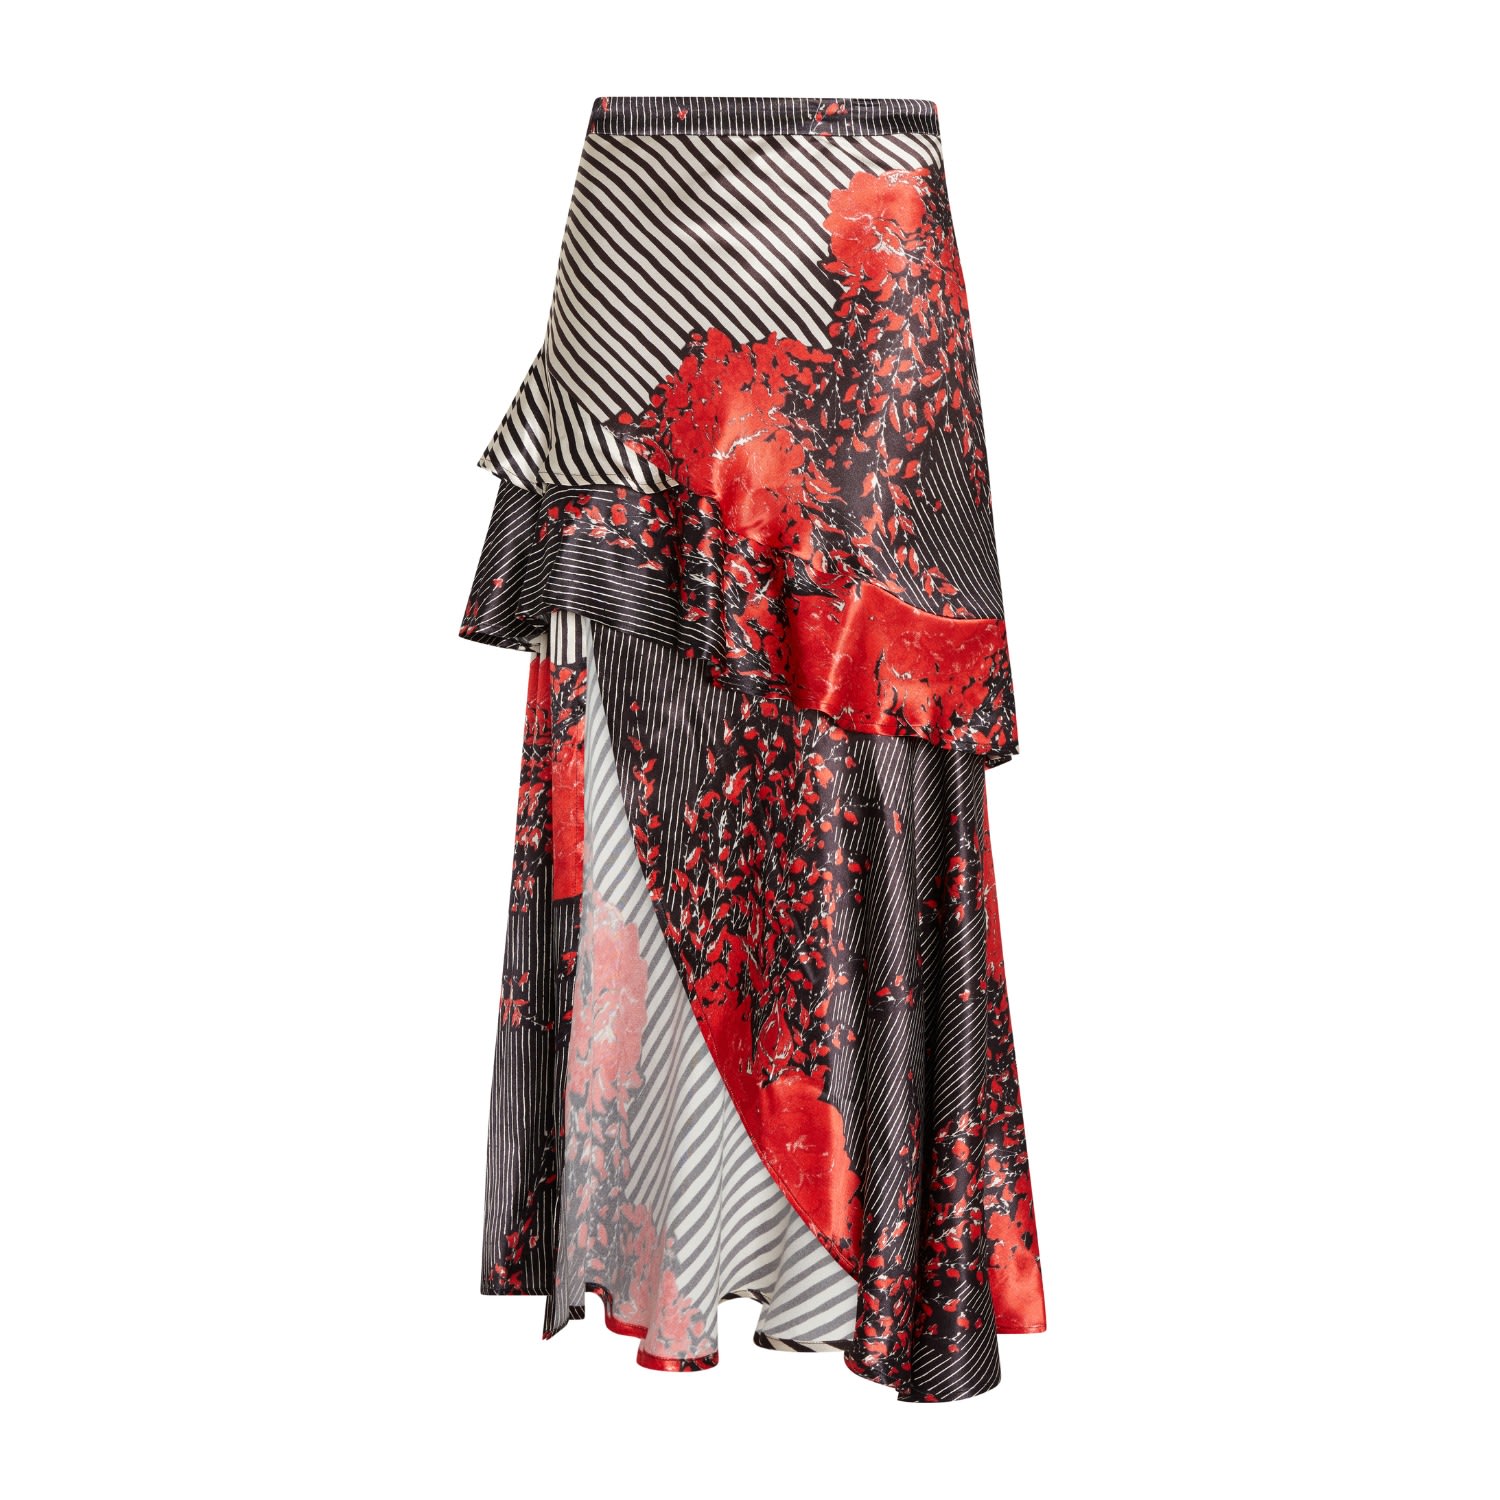 Shop Lahive Women's Pandora Detachable Print Skirt